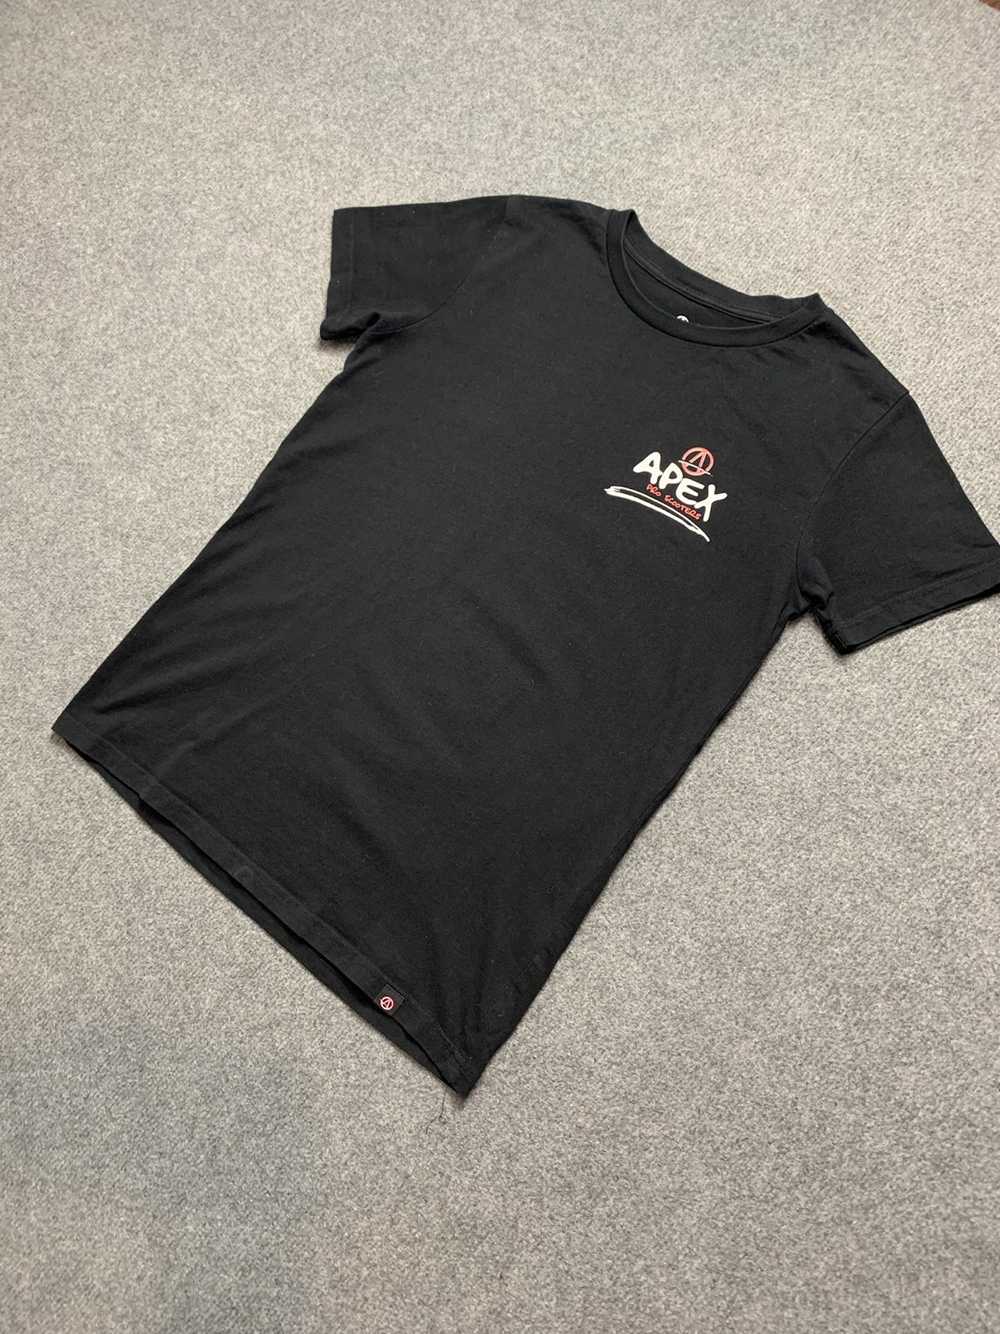 Apex × Apex One Apex t-shirt - image 2